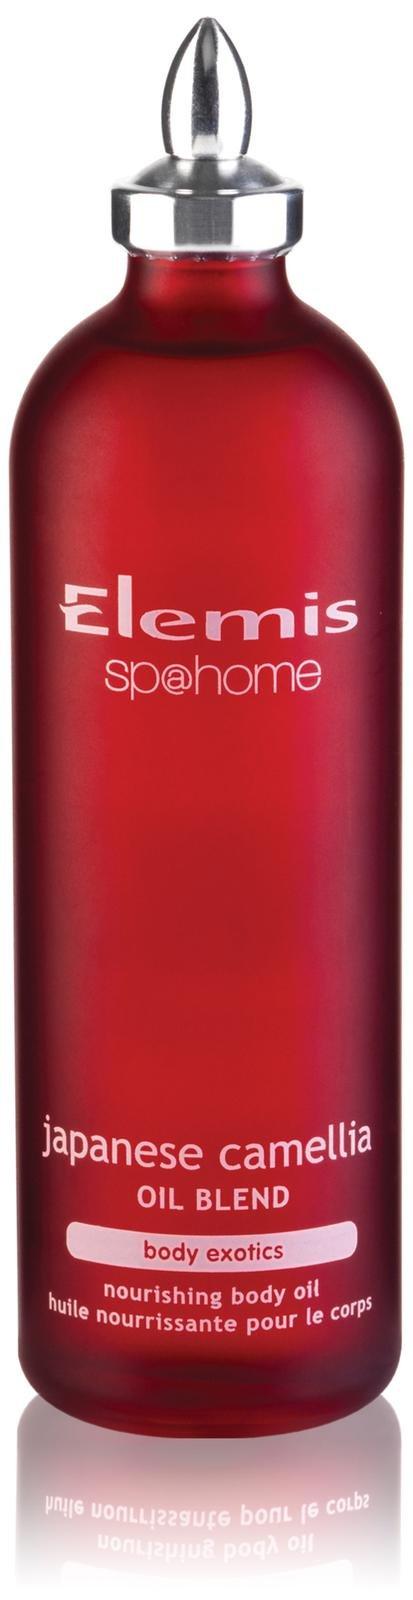 Elemis Sp@home Body Exotics Japanese Camellia Body Oil Blend